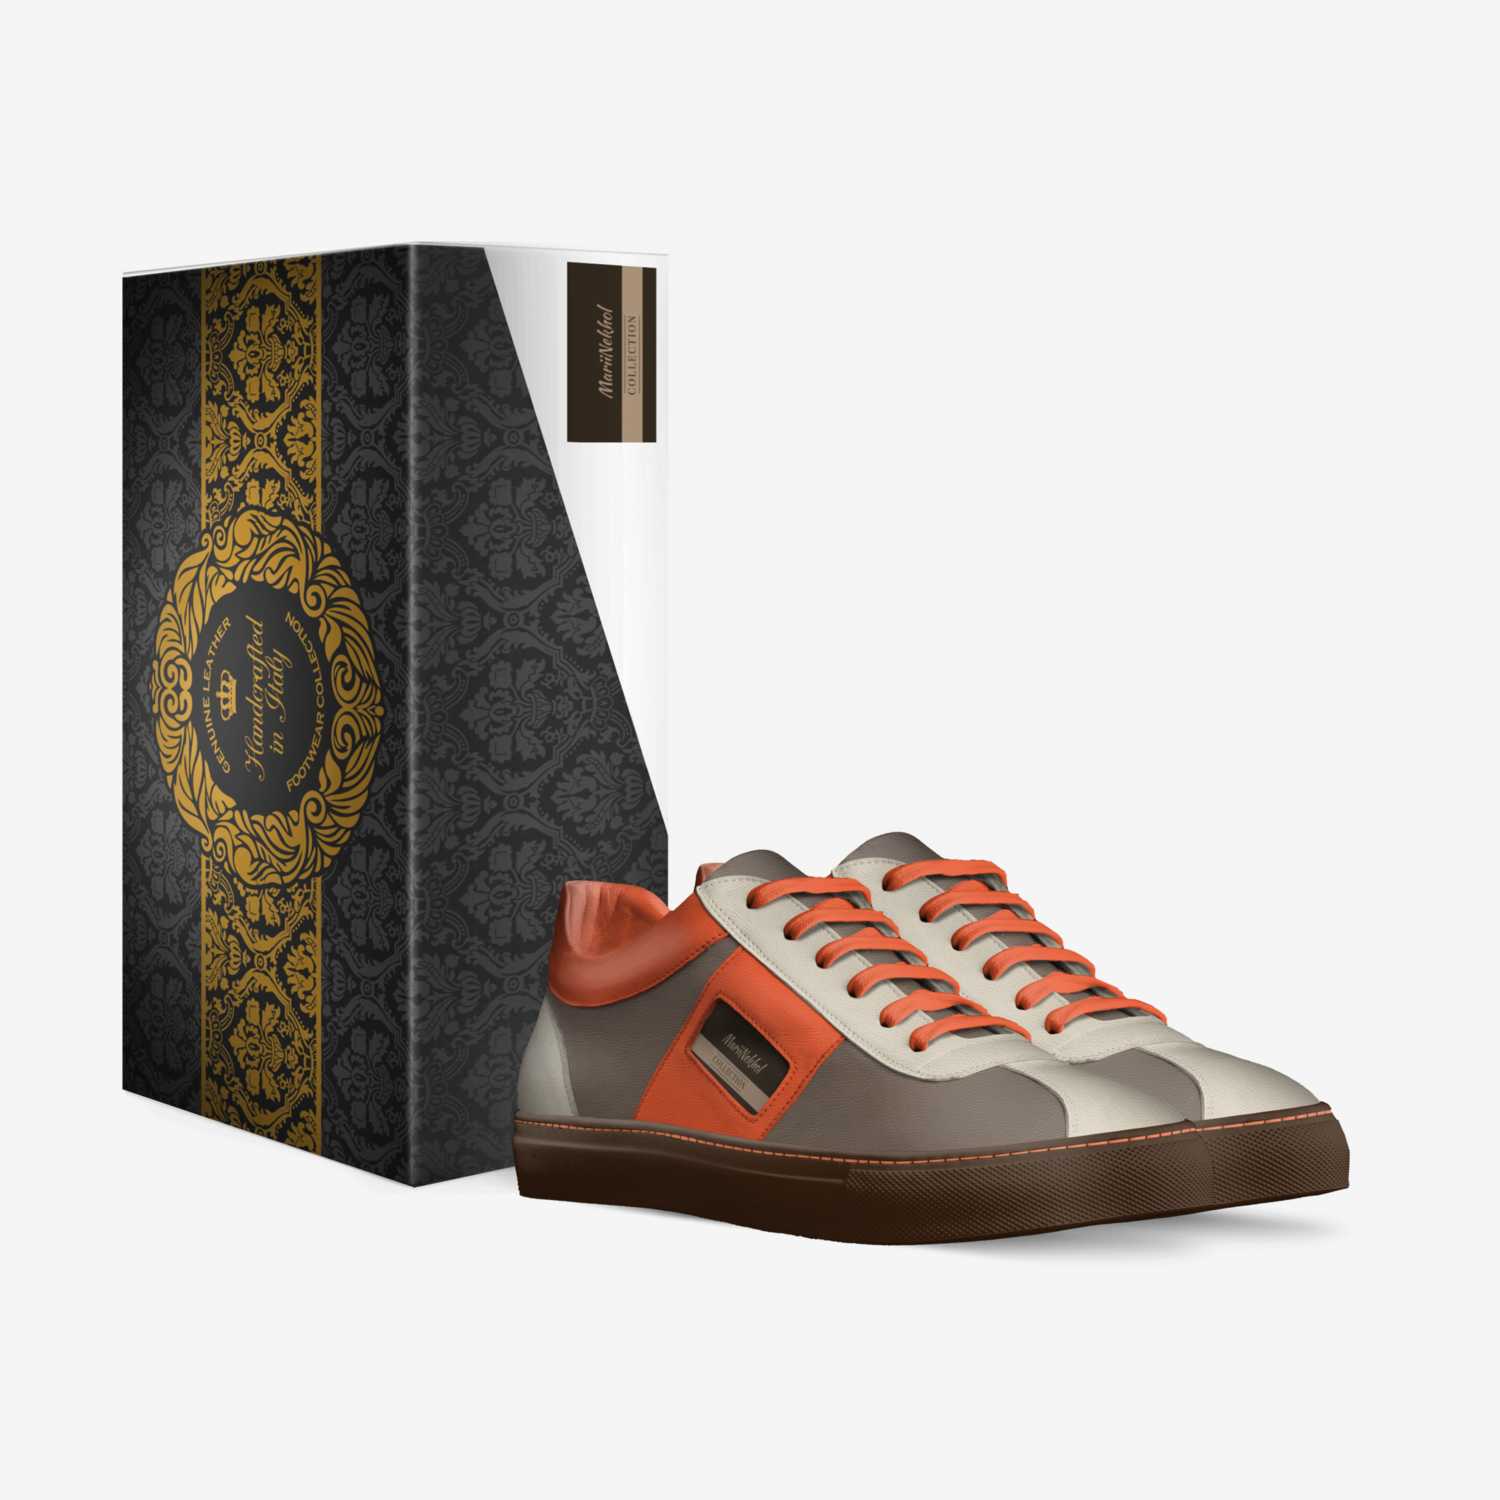 MariiNekhol custom made in Italy shoes by Na-imah Hasan | Box view